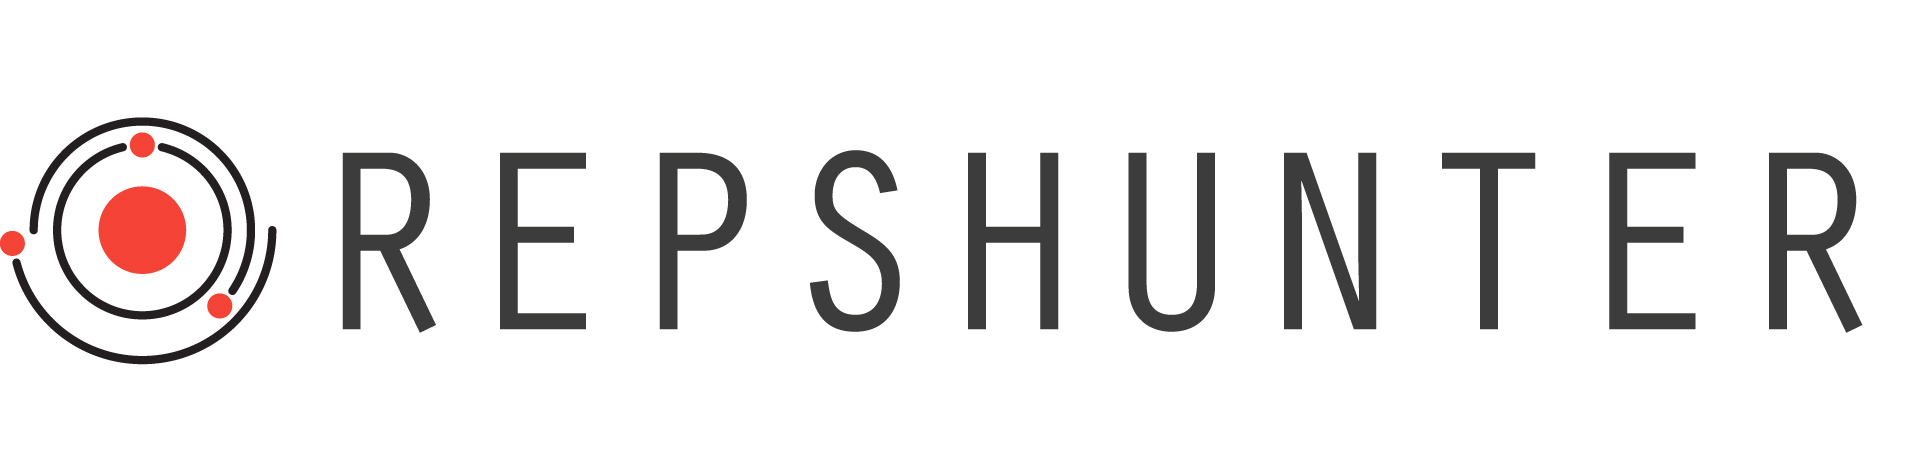 RepsHunter Logo